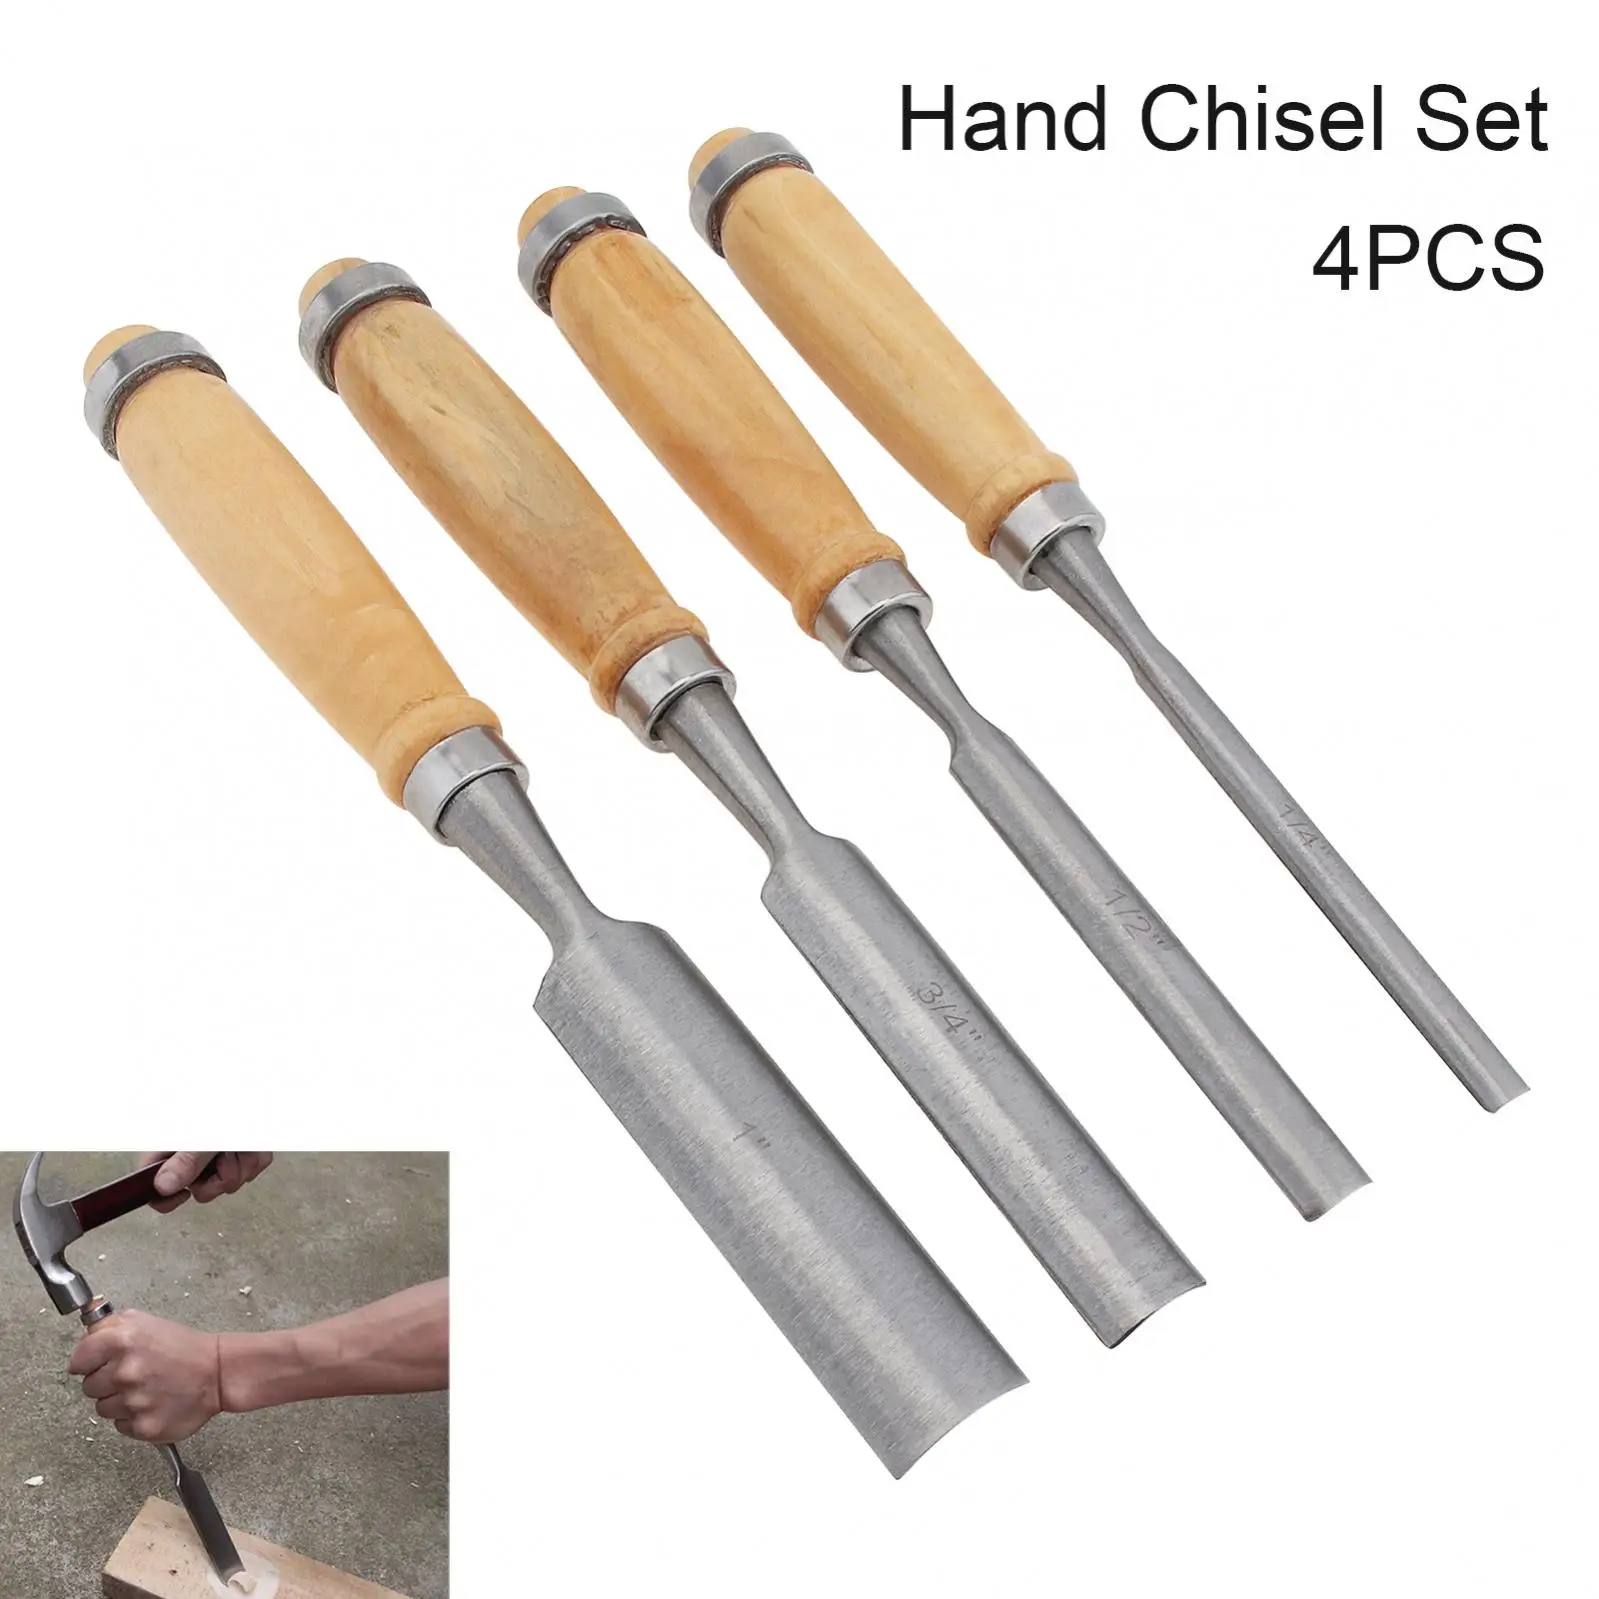 

4pcs Wood Carving Chisel Hand Tool Set Semi-Circular Steel Carpenter Wood Carving Gouge Chisels Tool For Home DIY Woodworking